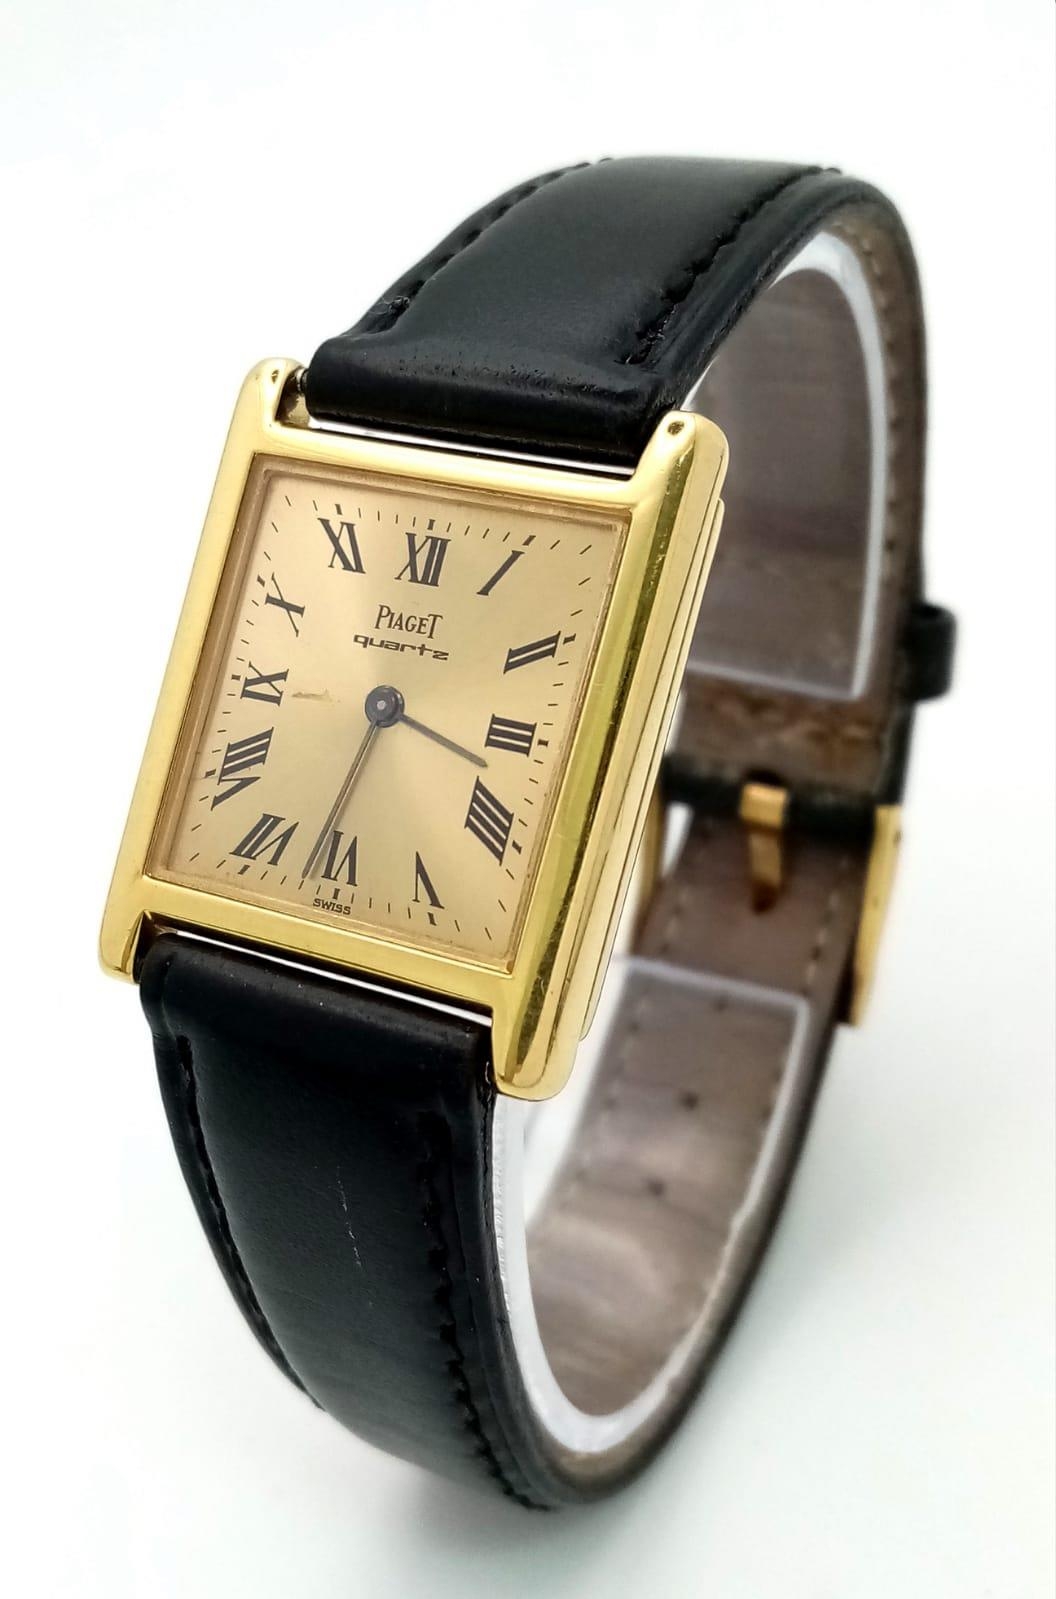 A Vintage 18k Gold Piaget Quartz Ladies Watch. Black leather strap with 18k gold buckle. 18k gold